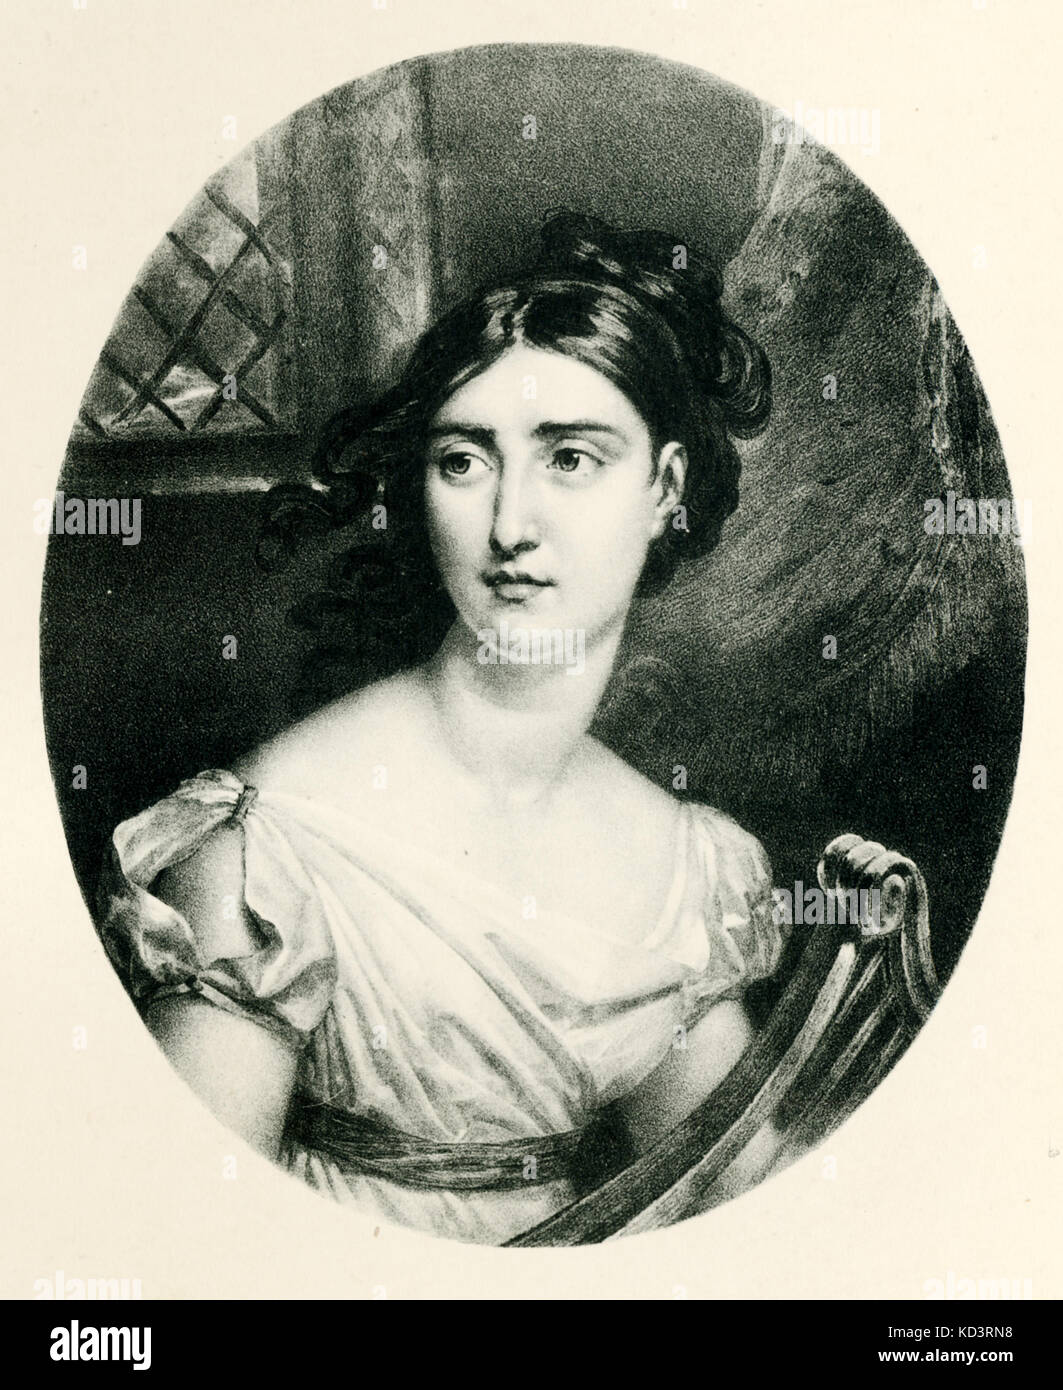 PASTA, Giuditta - as Desdemona Attained first great success as Desdemona in Paris 1821 season. Italian soprano, 1797-1865 Stock Photo